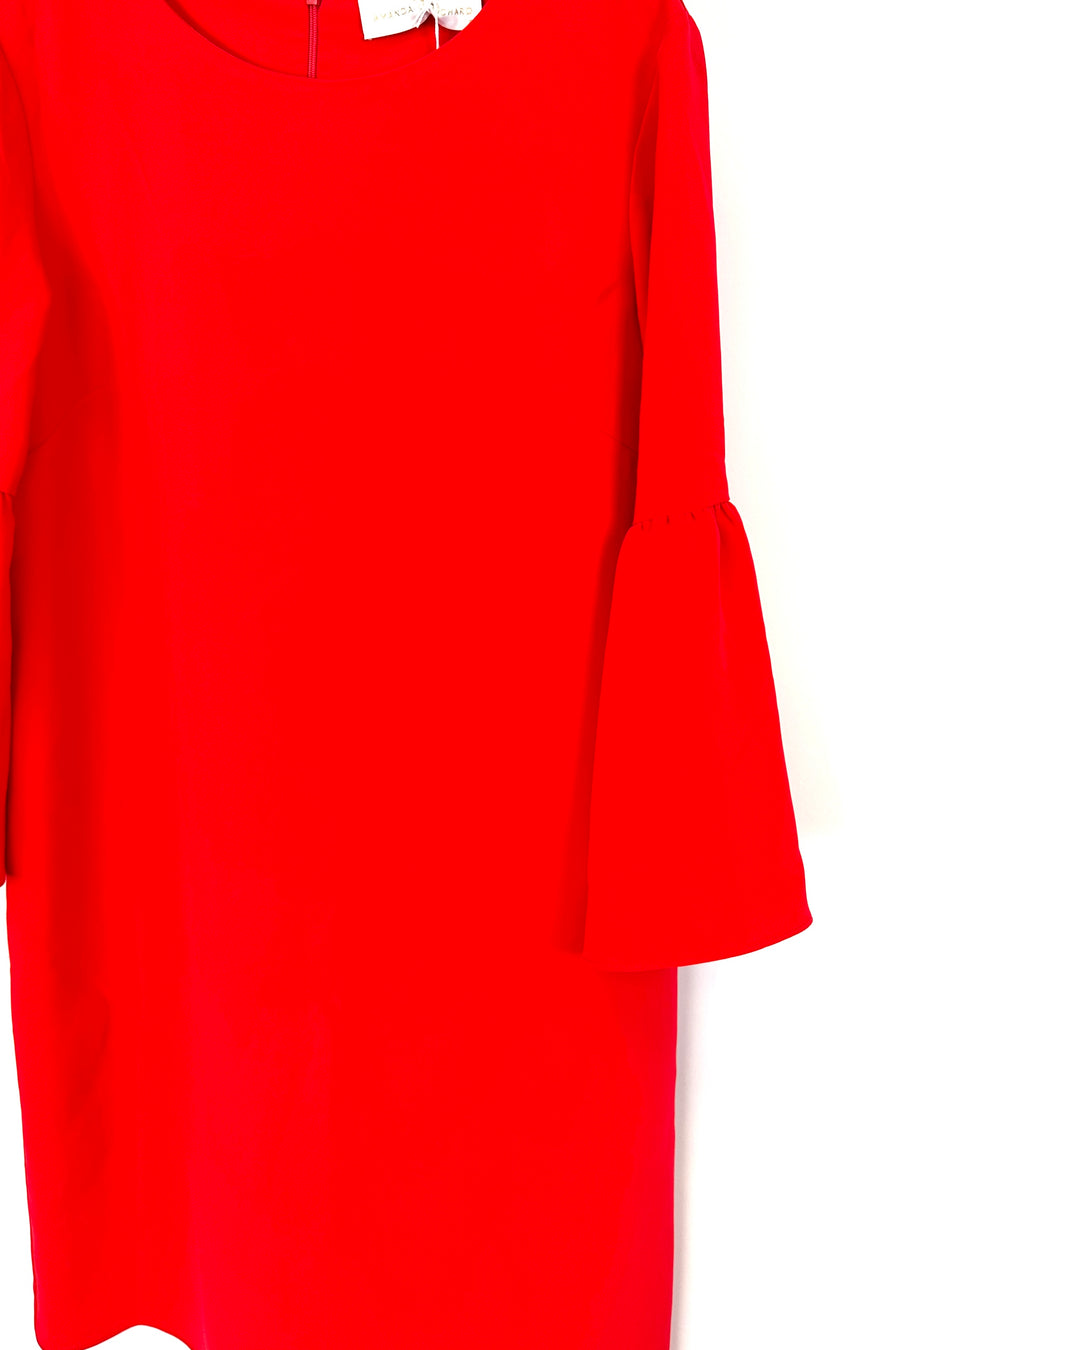 Red Quarter Sleeve Dress - Size 4